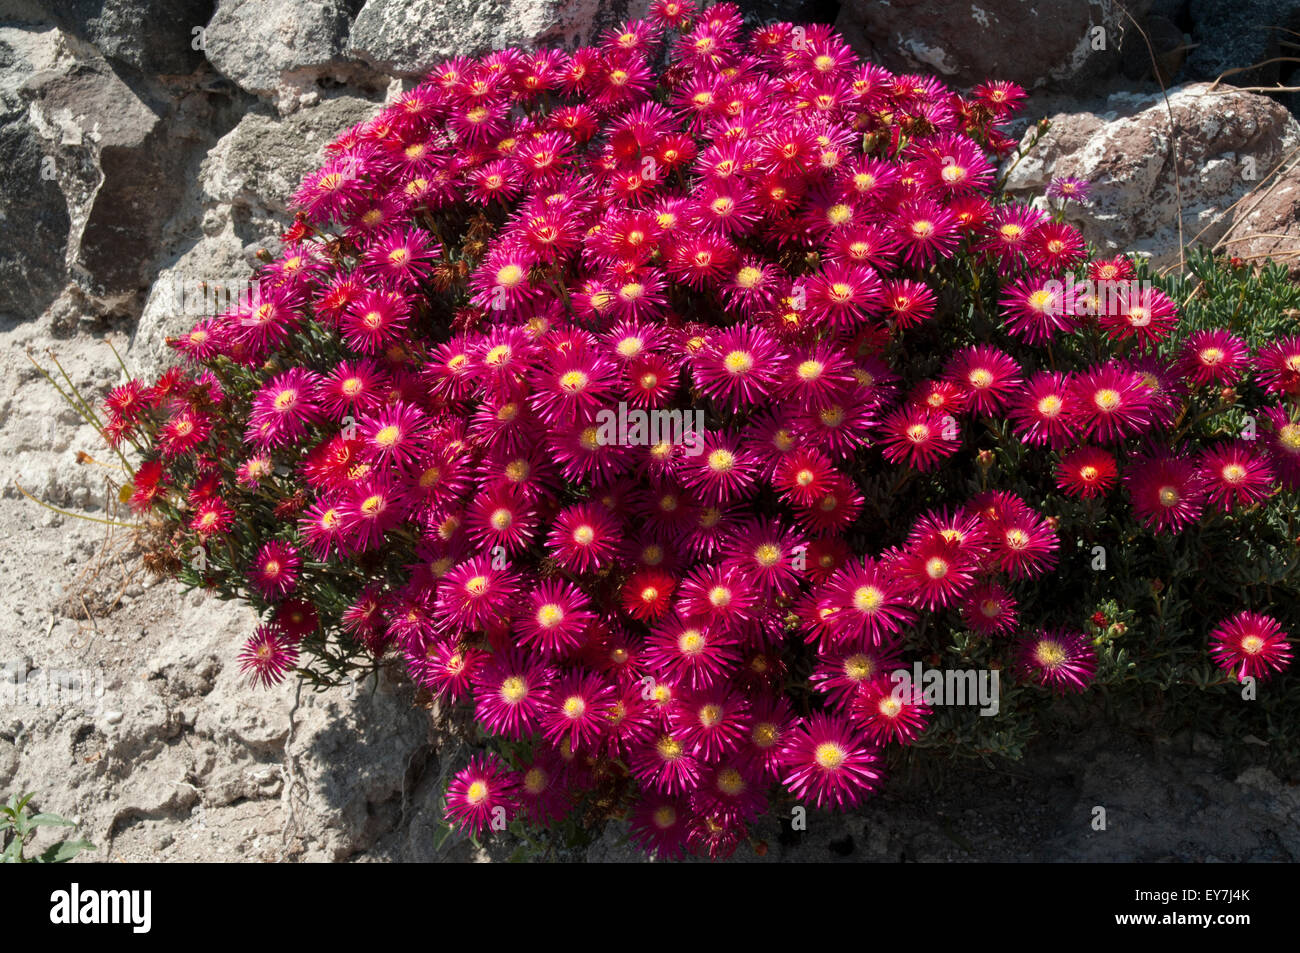 Pink Carpet flowering on the Santorini Island in the Aegean Sea.  Die Rote Mittagsblume blüht auf Santorini in der Ägäis. Stock Photo